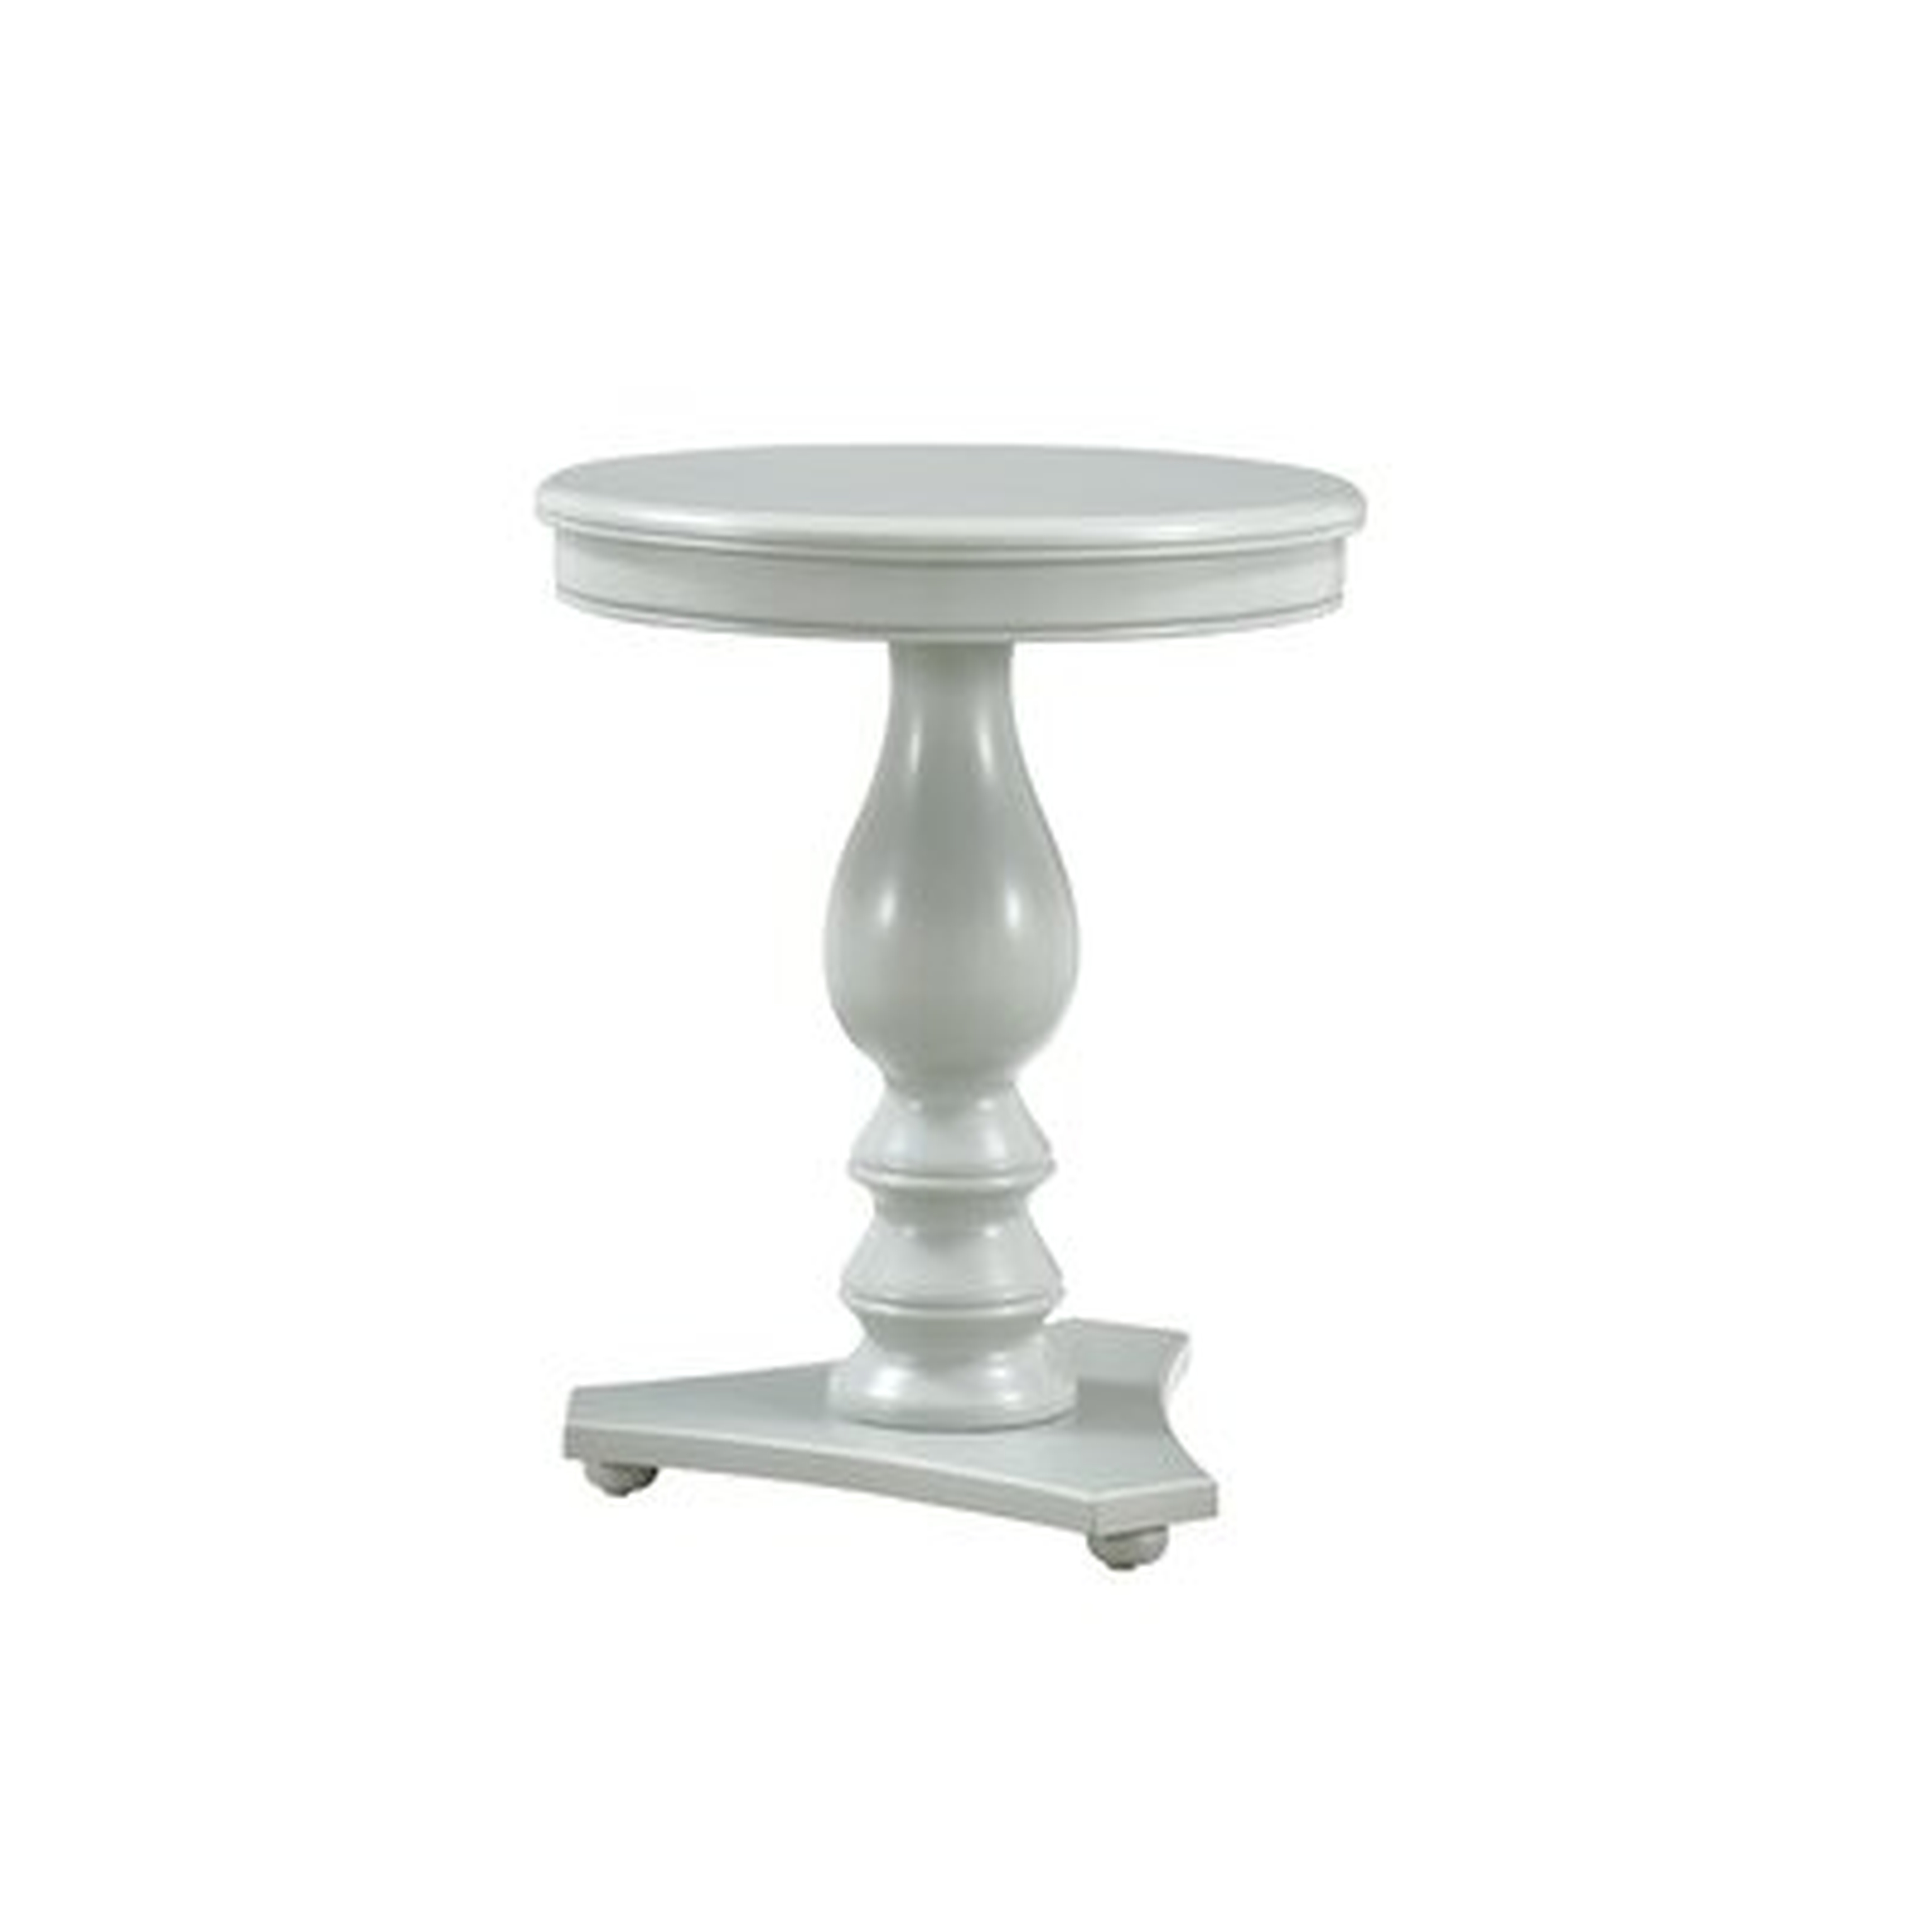 Dollison Pedestal End Table with Storage - Wayfair